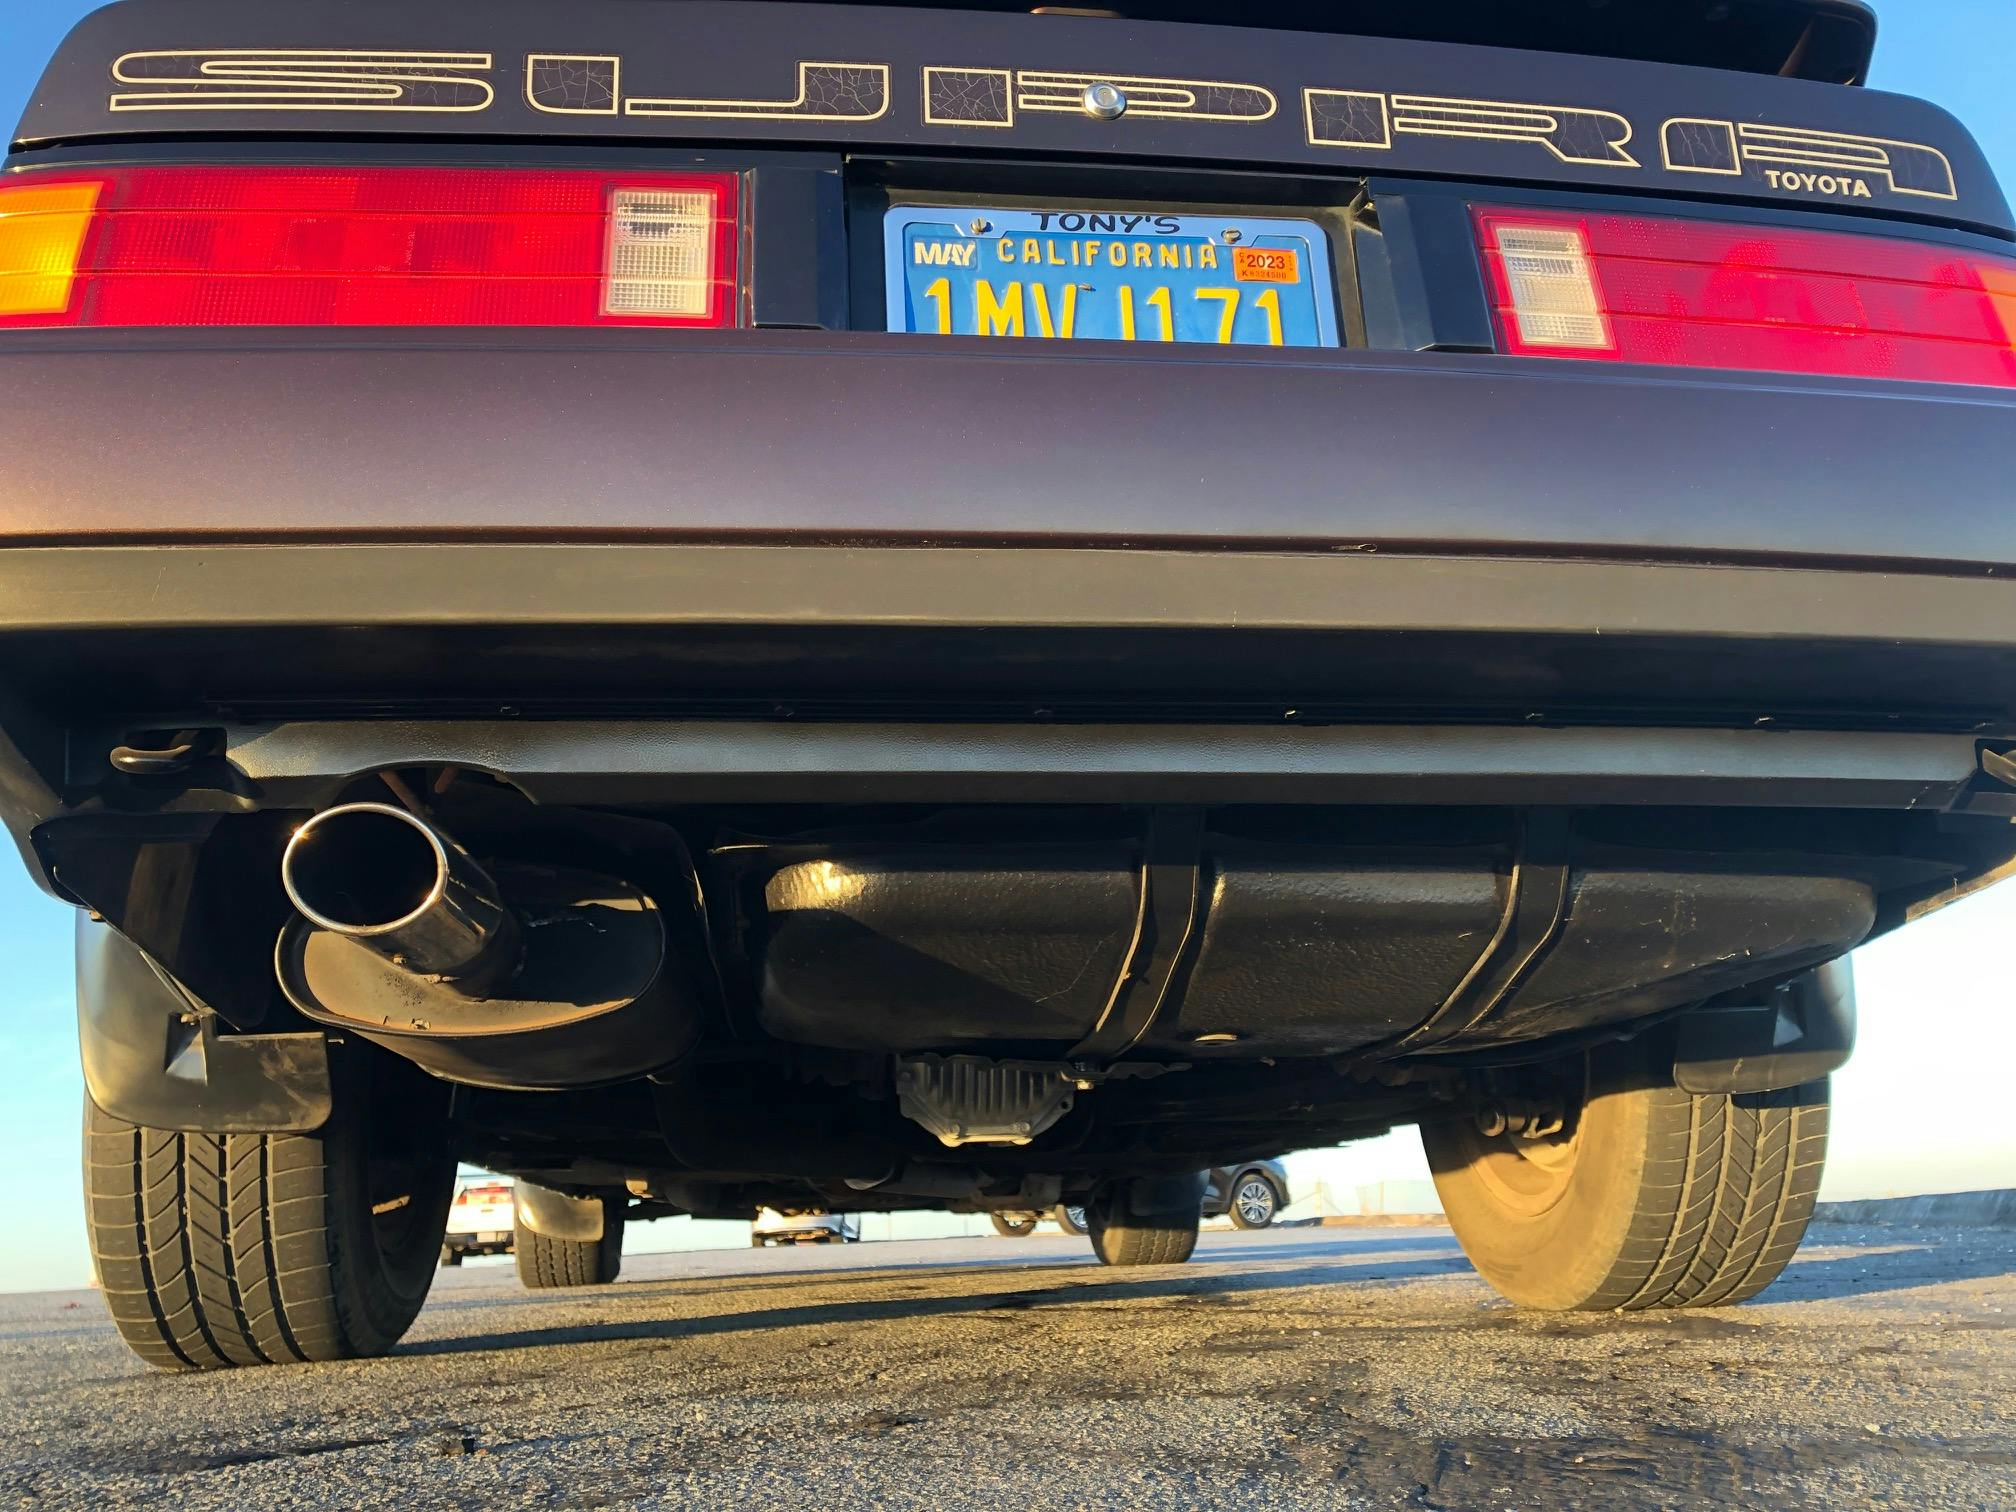 1985 Supra rear low angle underside